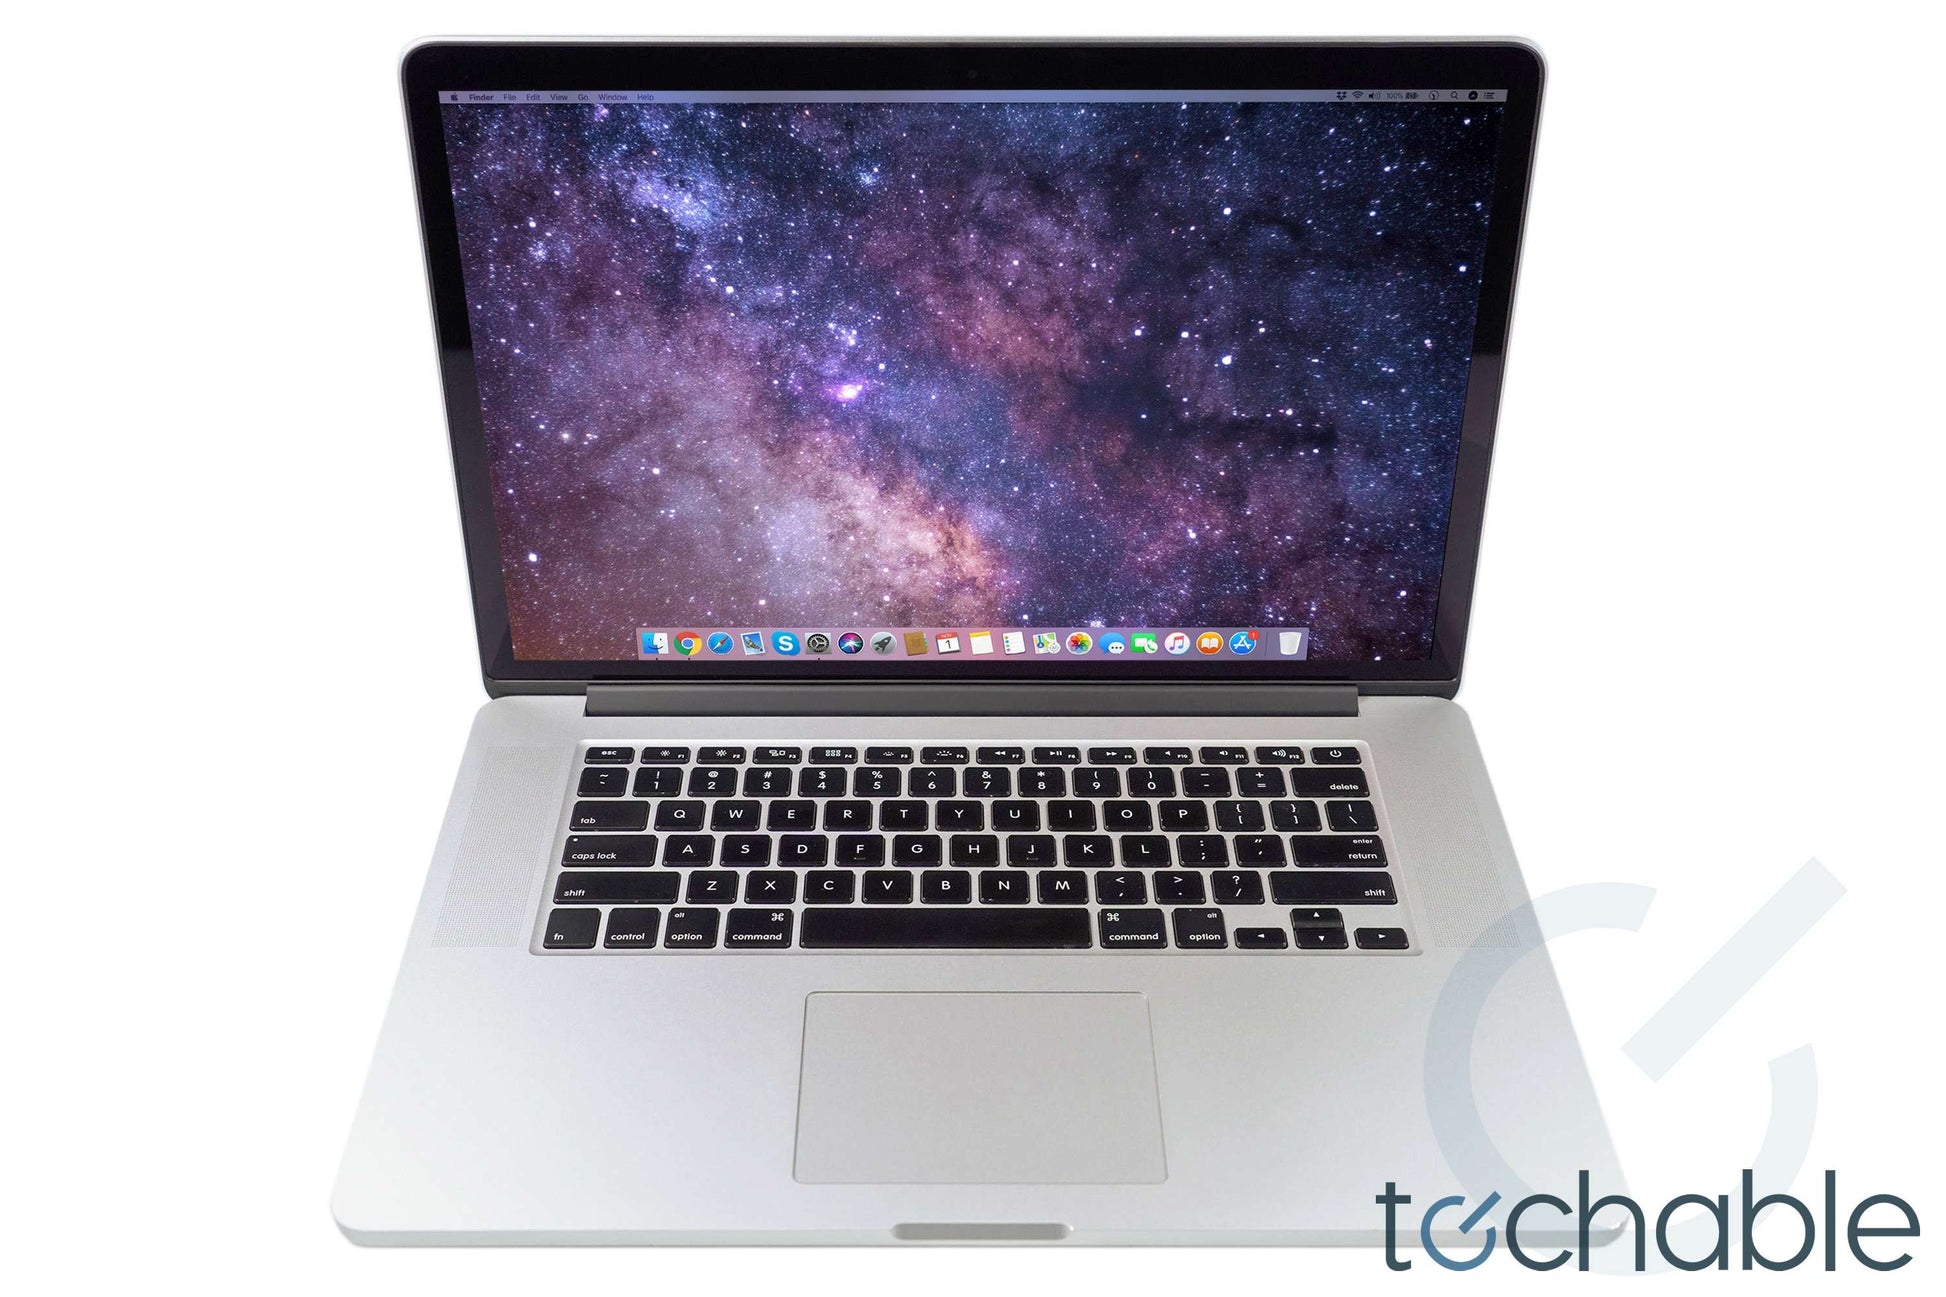 Apple MacBook Pro 15-inch (Mid 2015) 2.8GHz Quad Core i7 16 GB RAM Dual GPU + New Battery